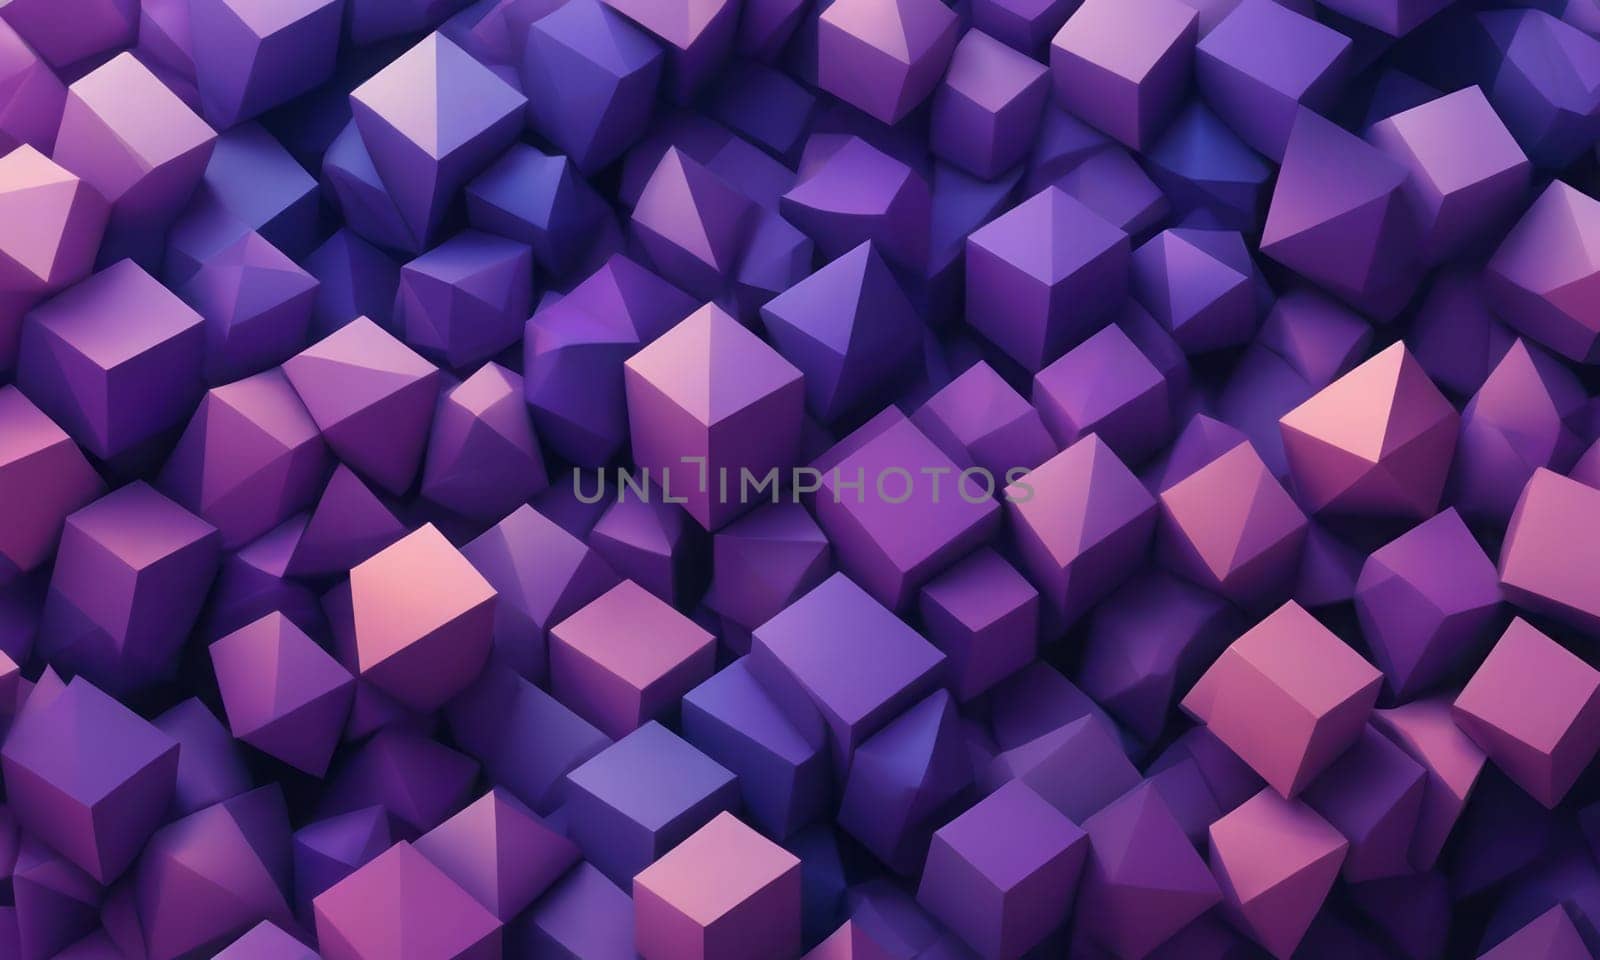 Cubist Shapes in Purple Dark violet by nkotlyar